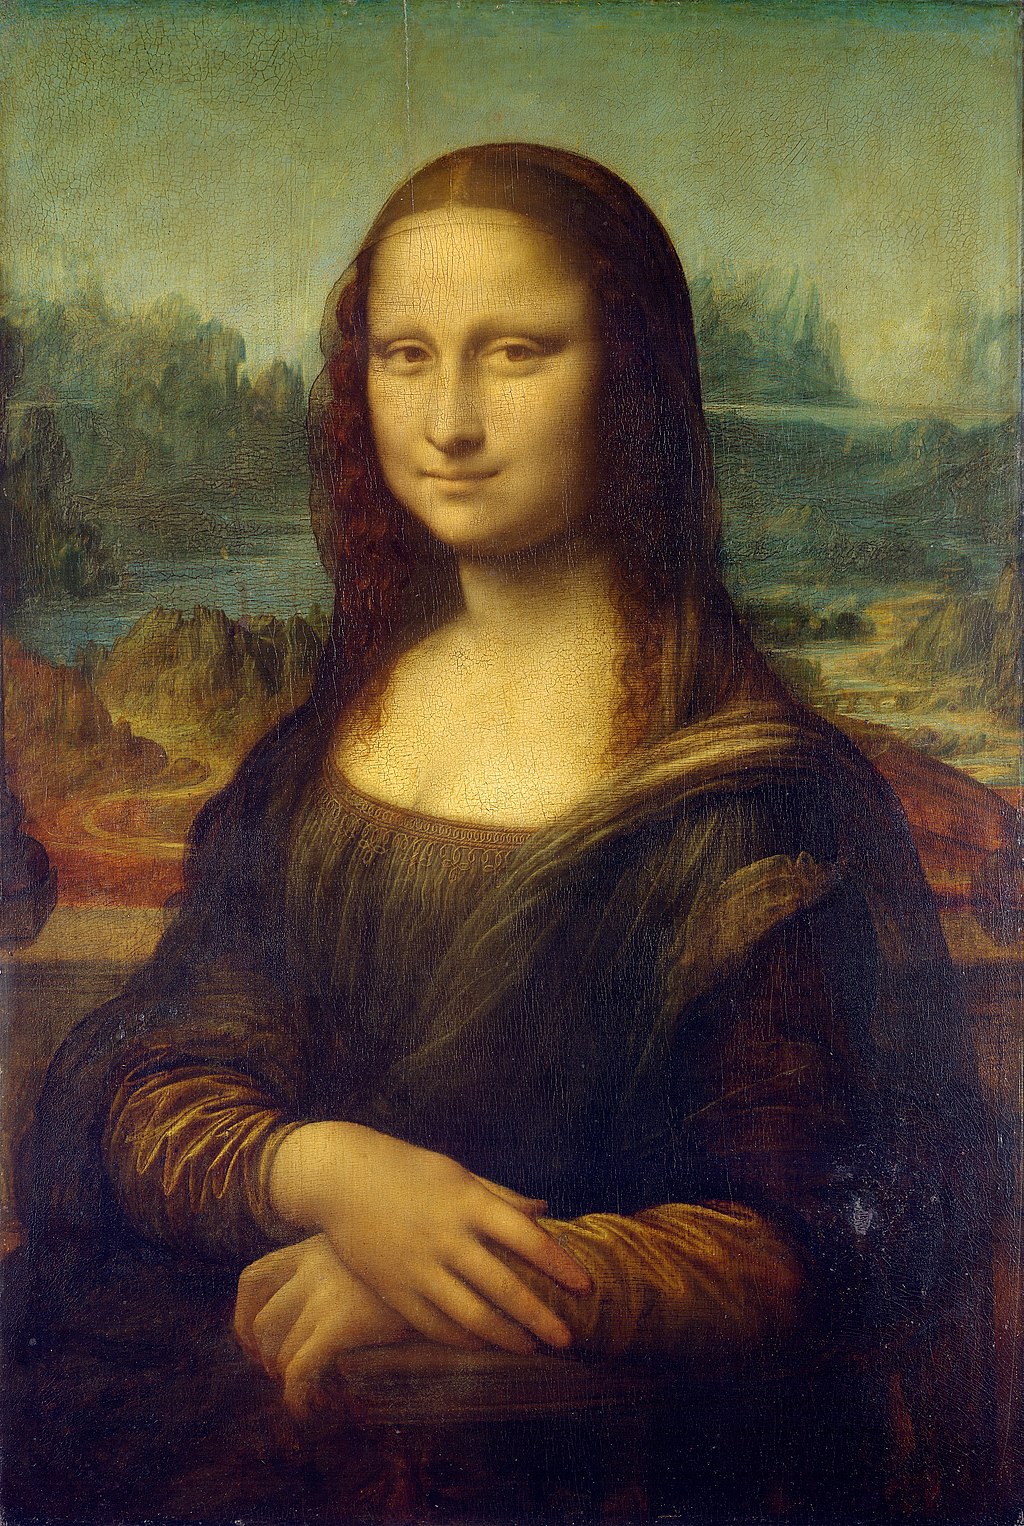 Mona Lisa" by Leonardo da Vinci